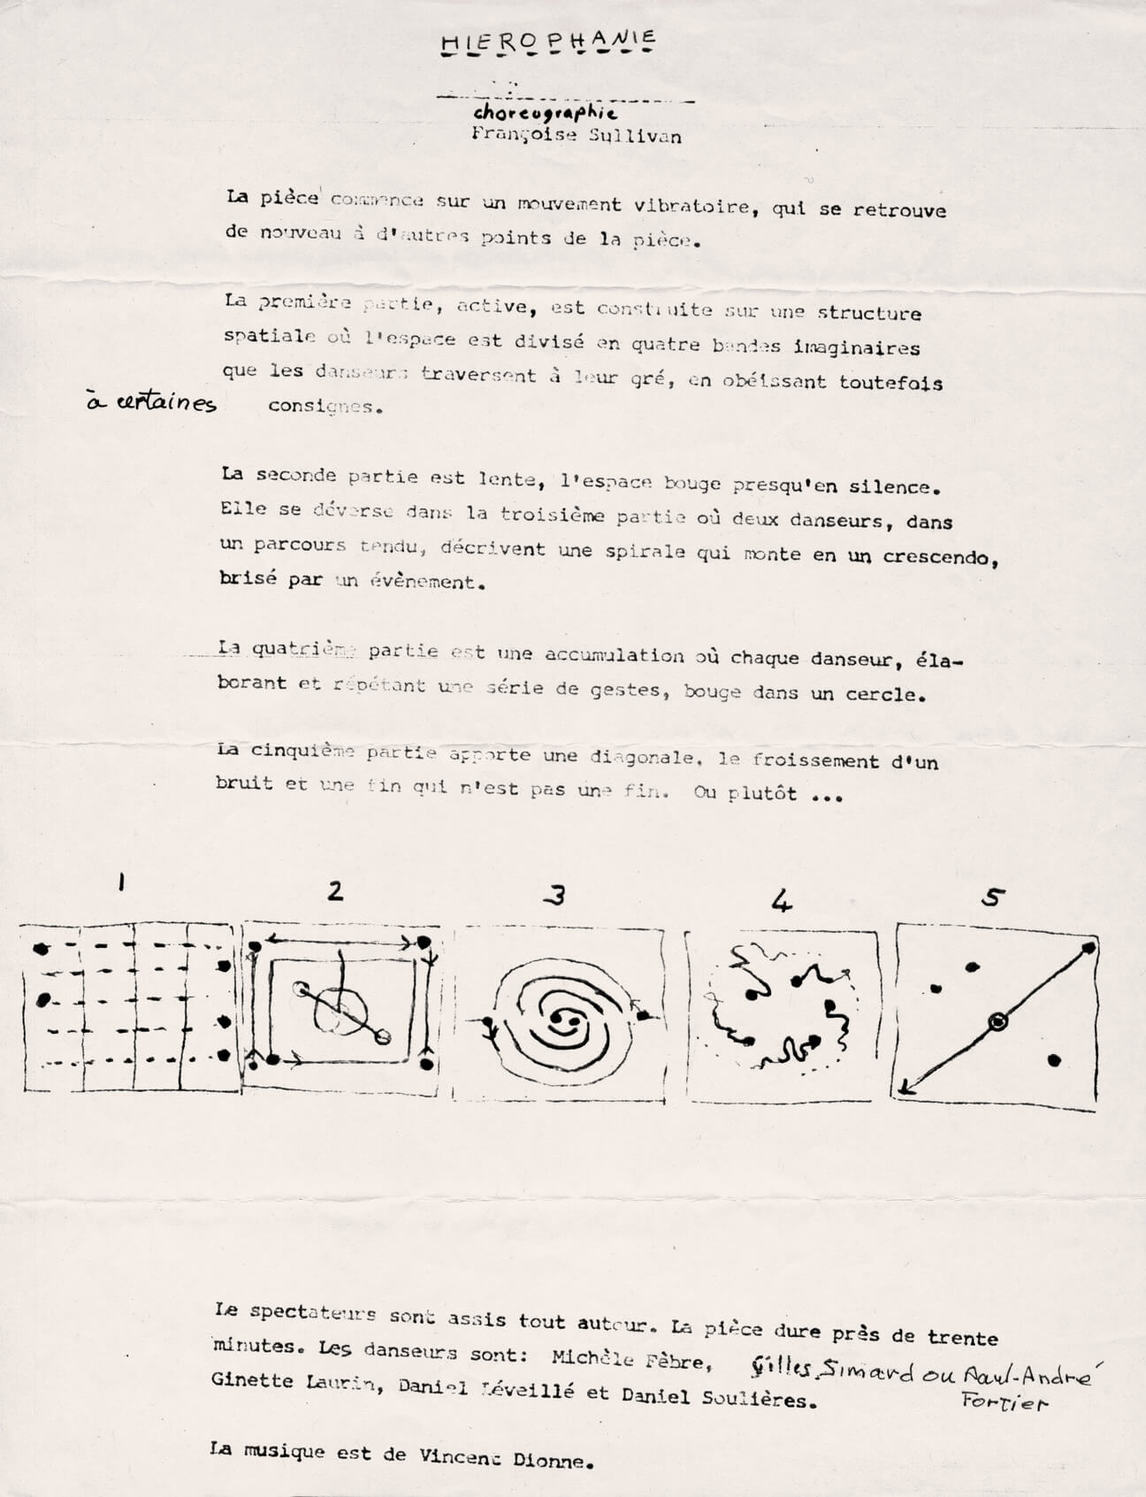 Choreographic notes for Françoise Sullivan’s Hierophany, 1979.